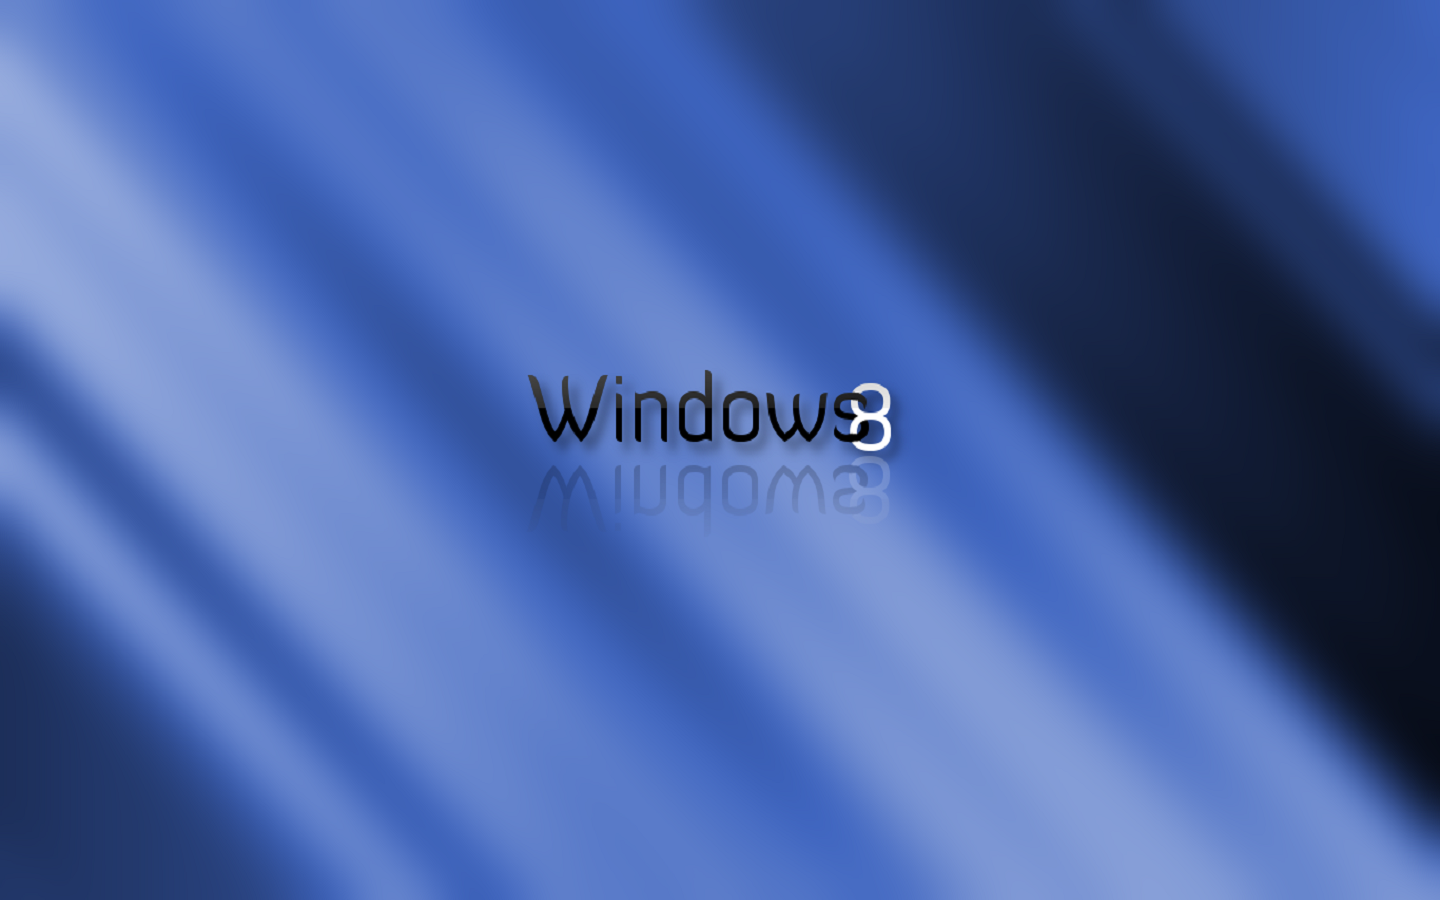 name windows 8 wallpapers images 13 genre window 8 windows wallpaper 1440x900